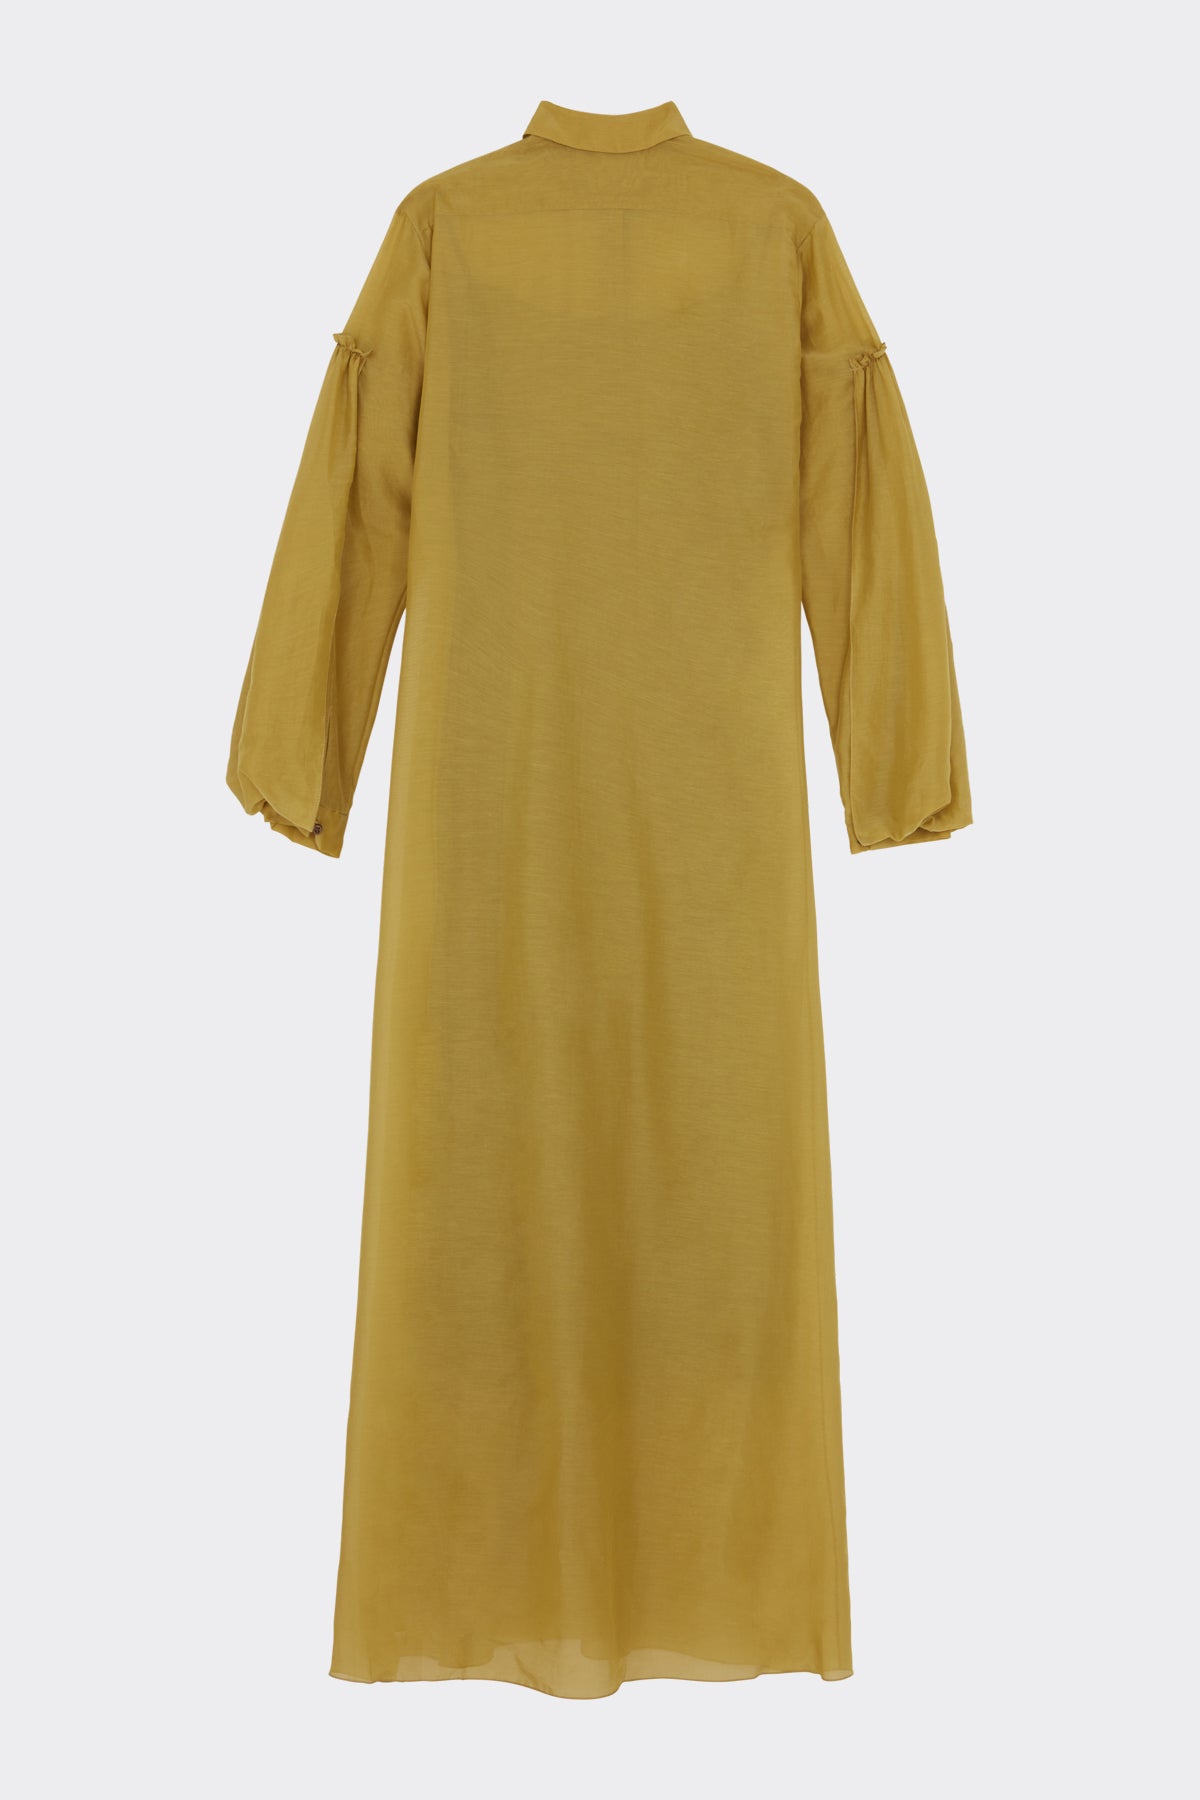 Jolene Dress in Saffron| Noon by Noor